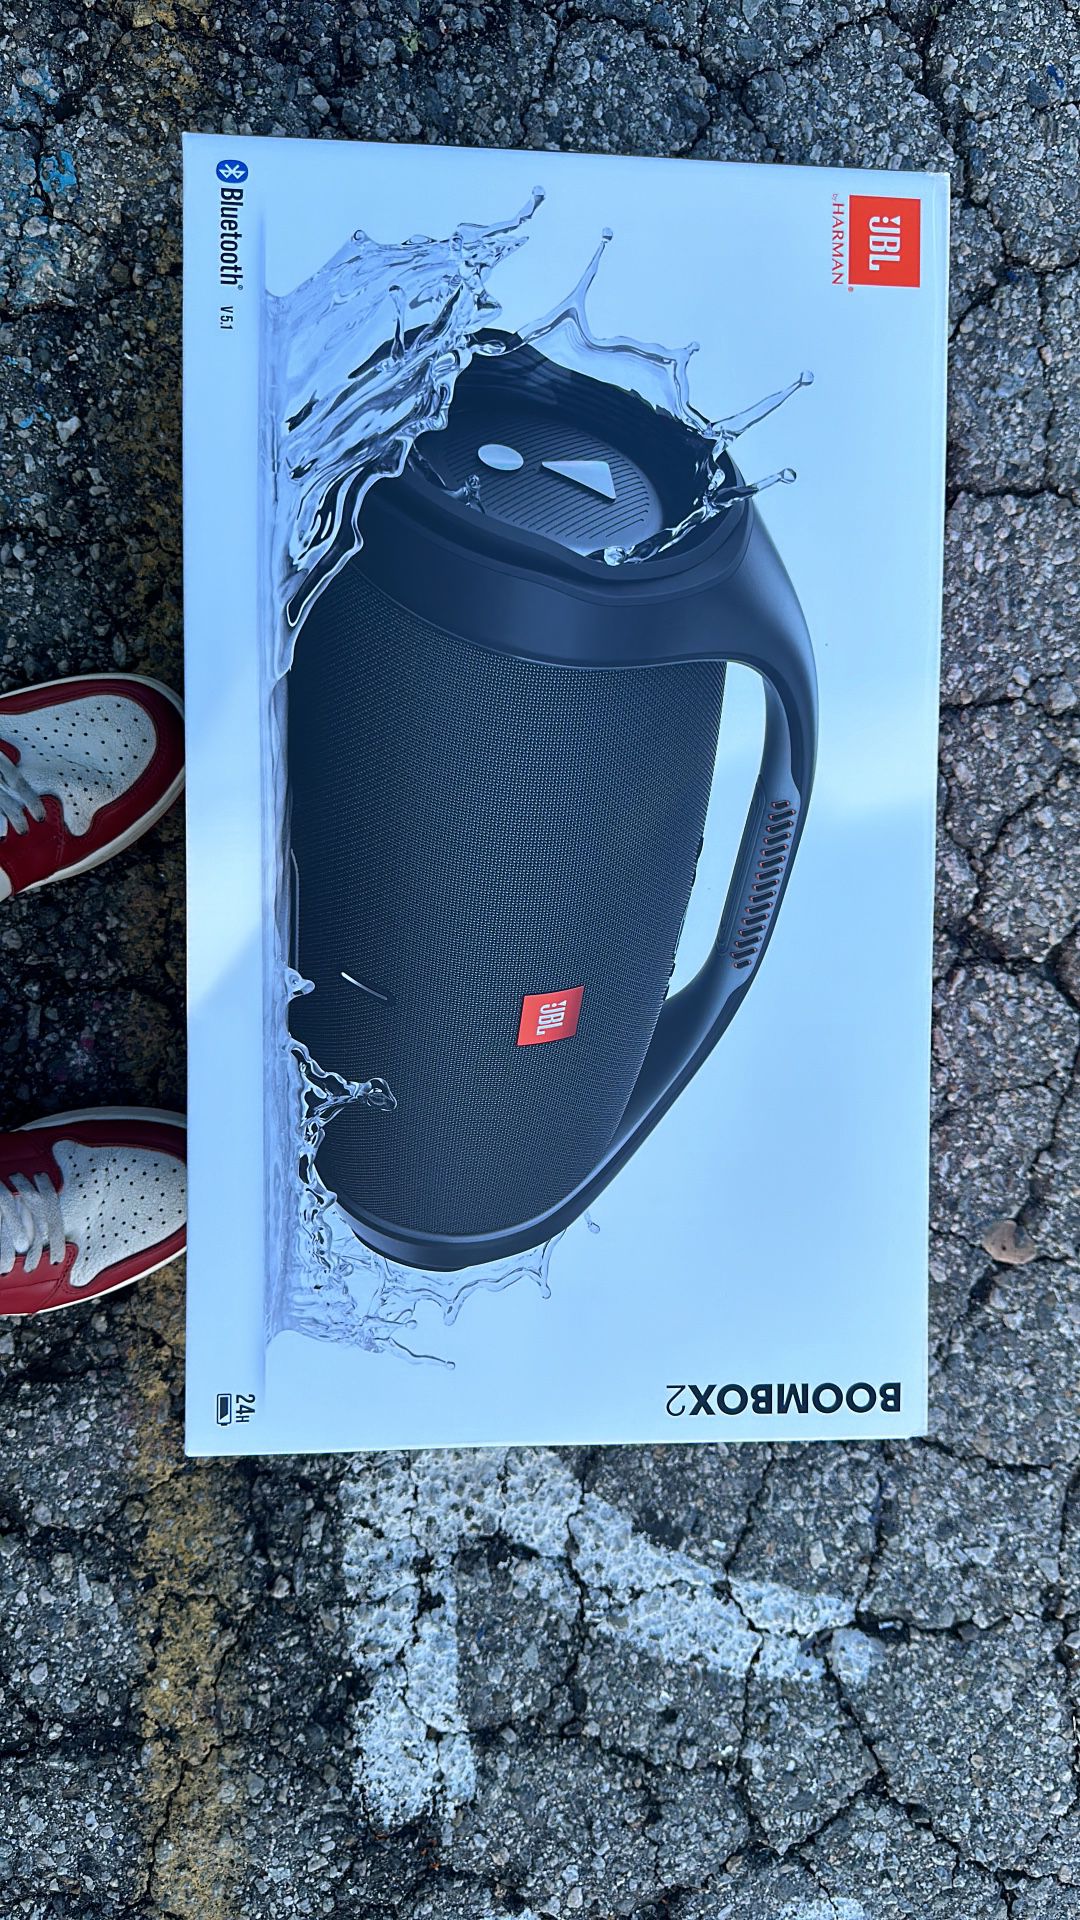 JBL Speaker BOOMBOX 2. Bluetooth Waterproof.” BRAND NEW. $290